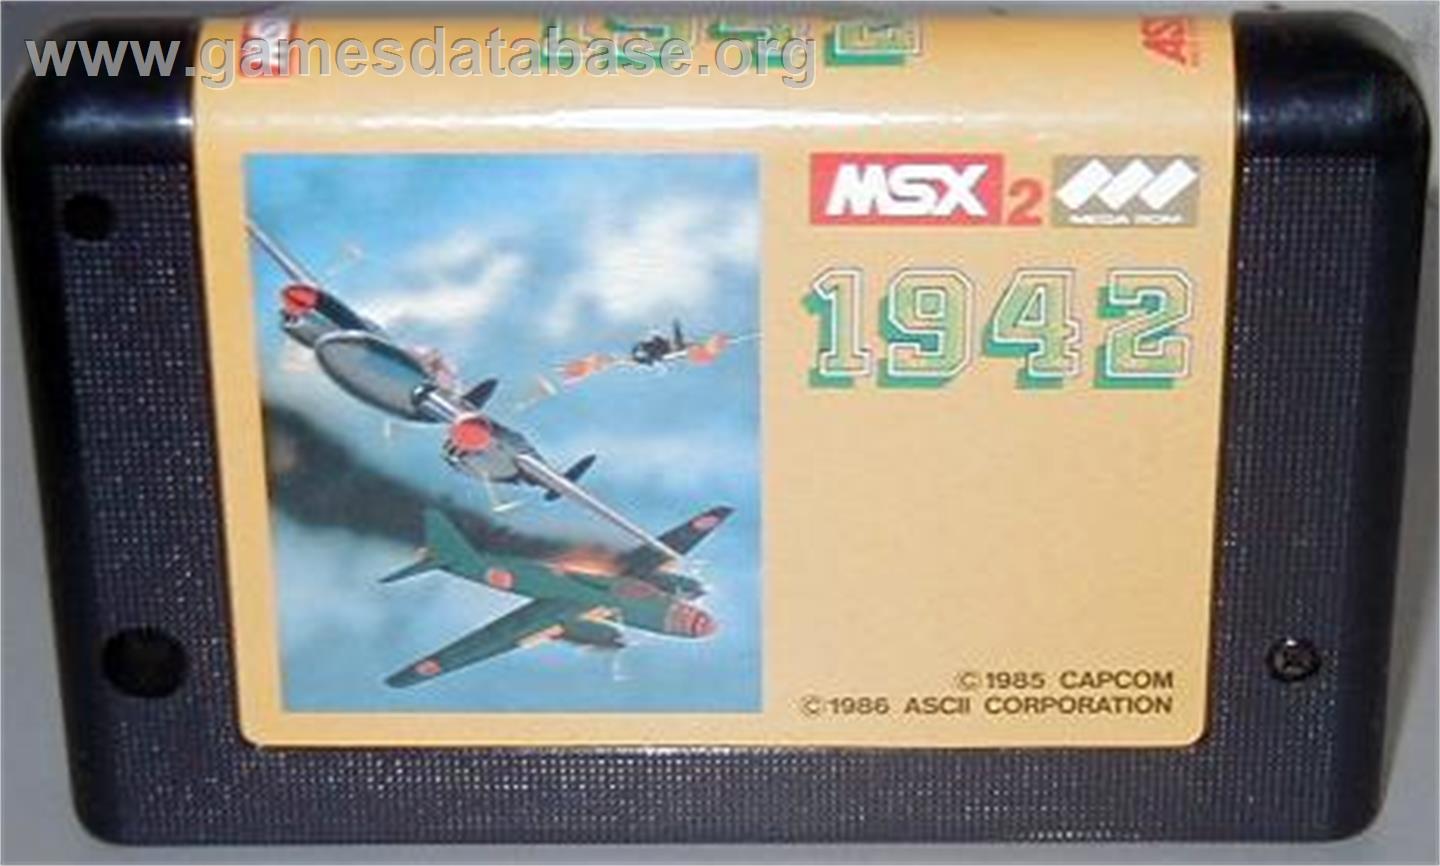 1942 - MSX - Artwork - Cartridge